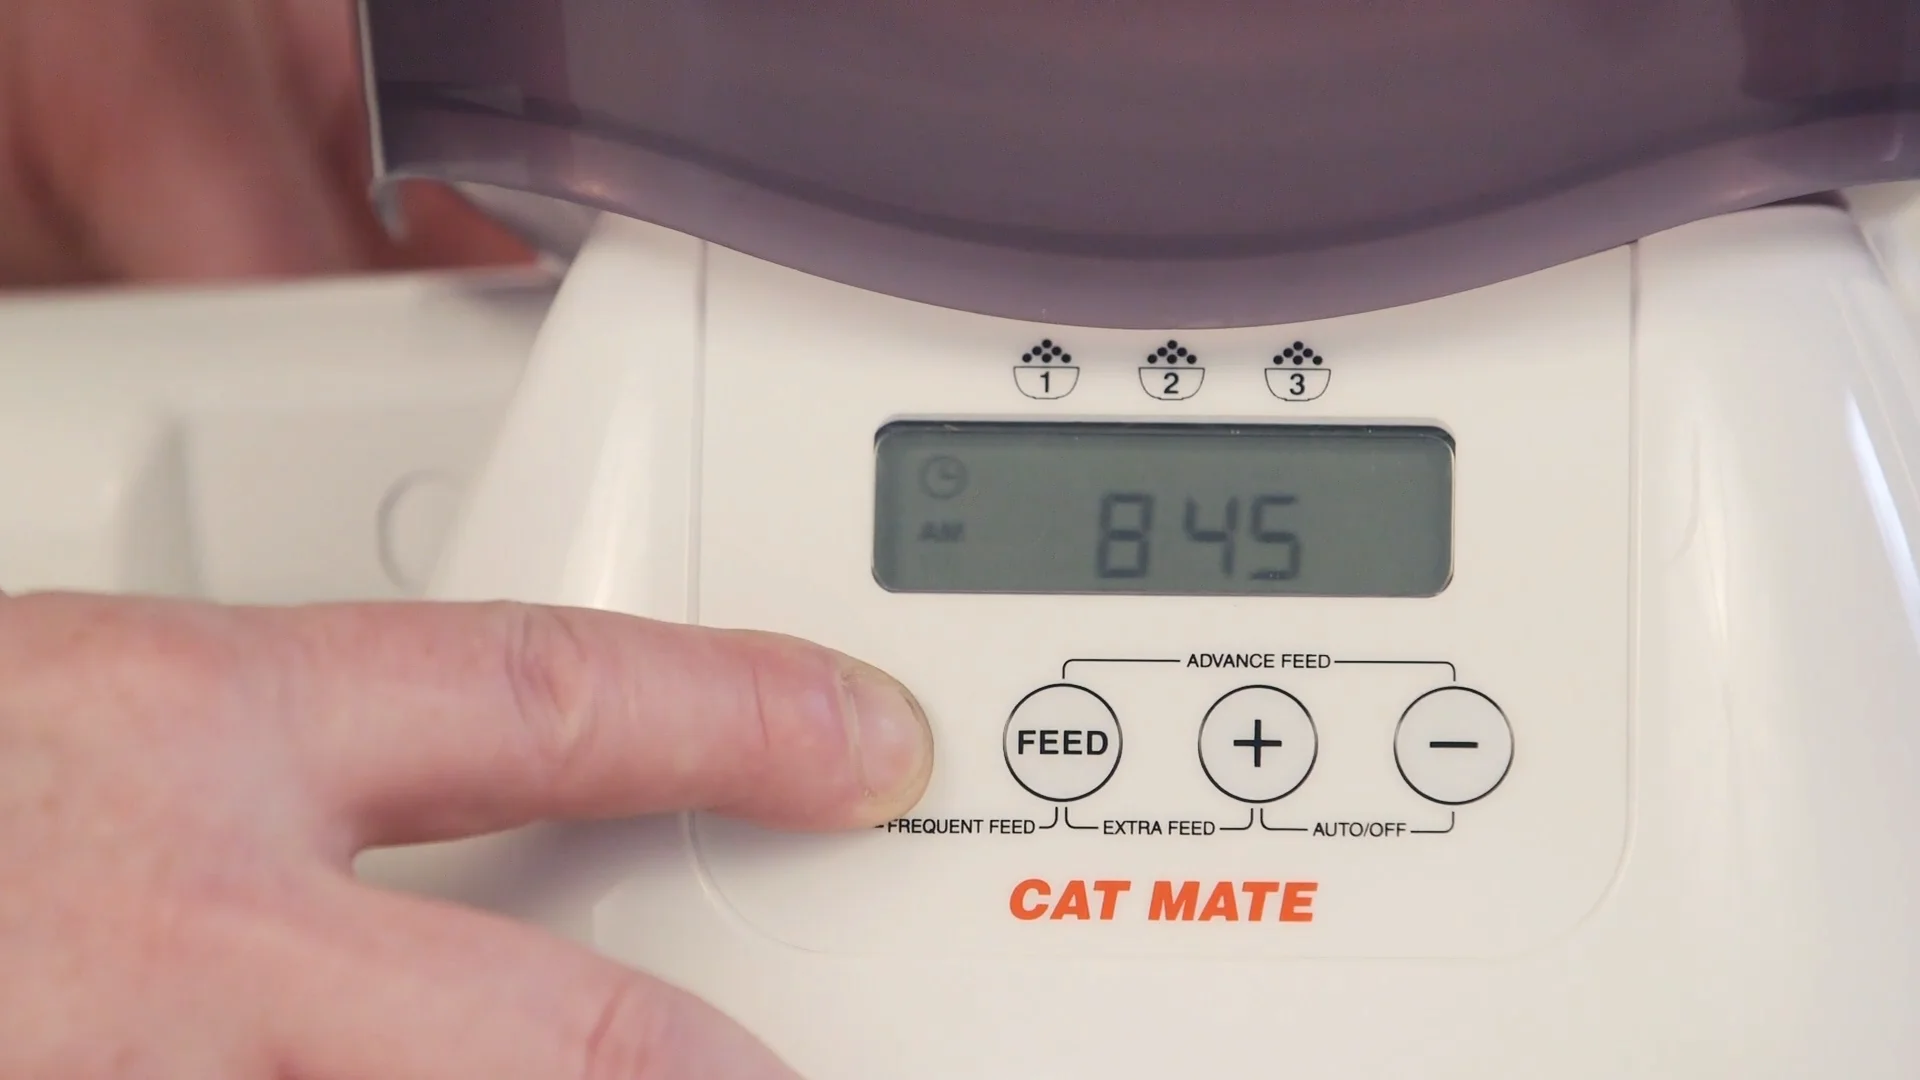 Pet Mate Cat Mate C3000 Instruction Video on Vimeo